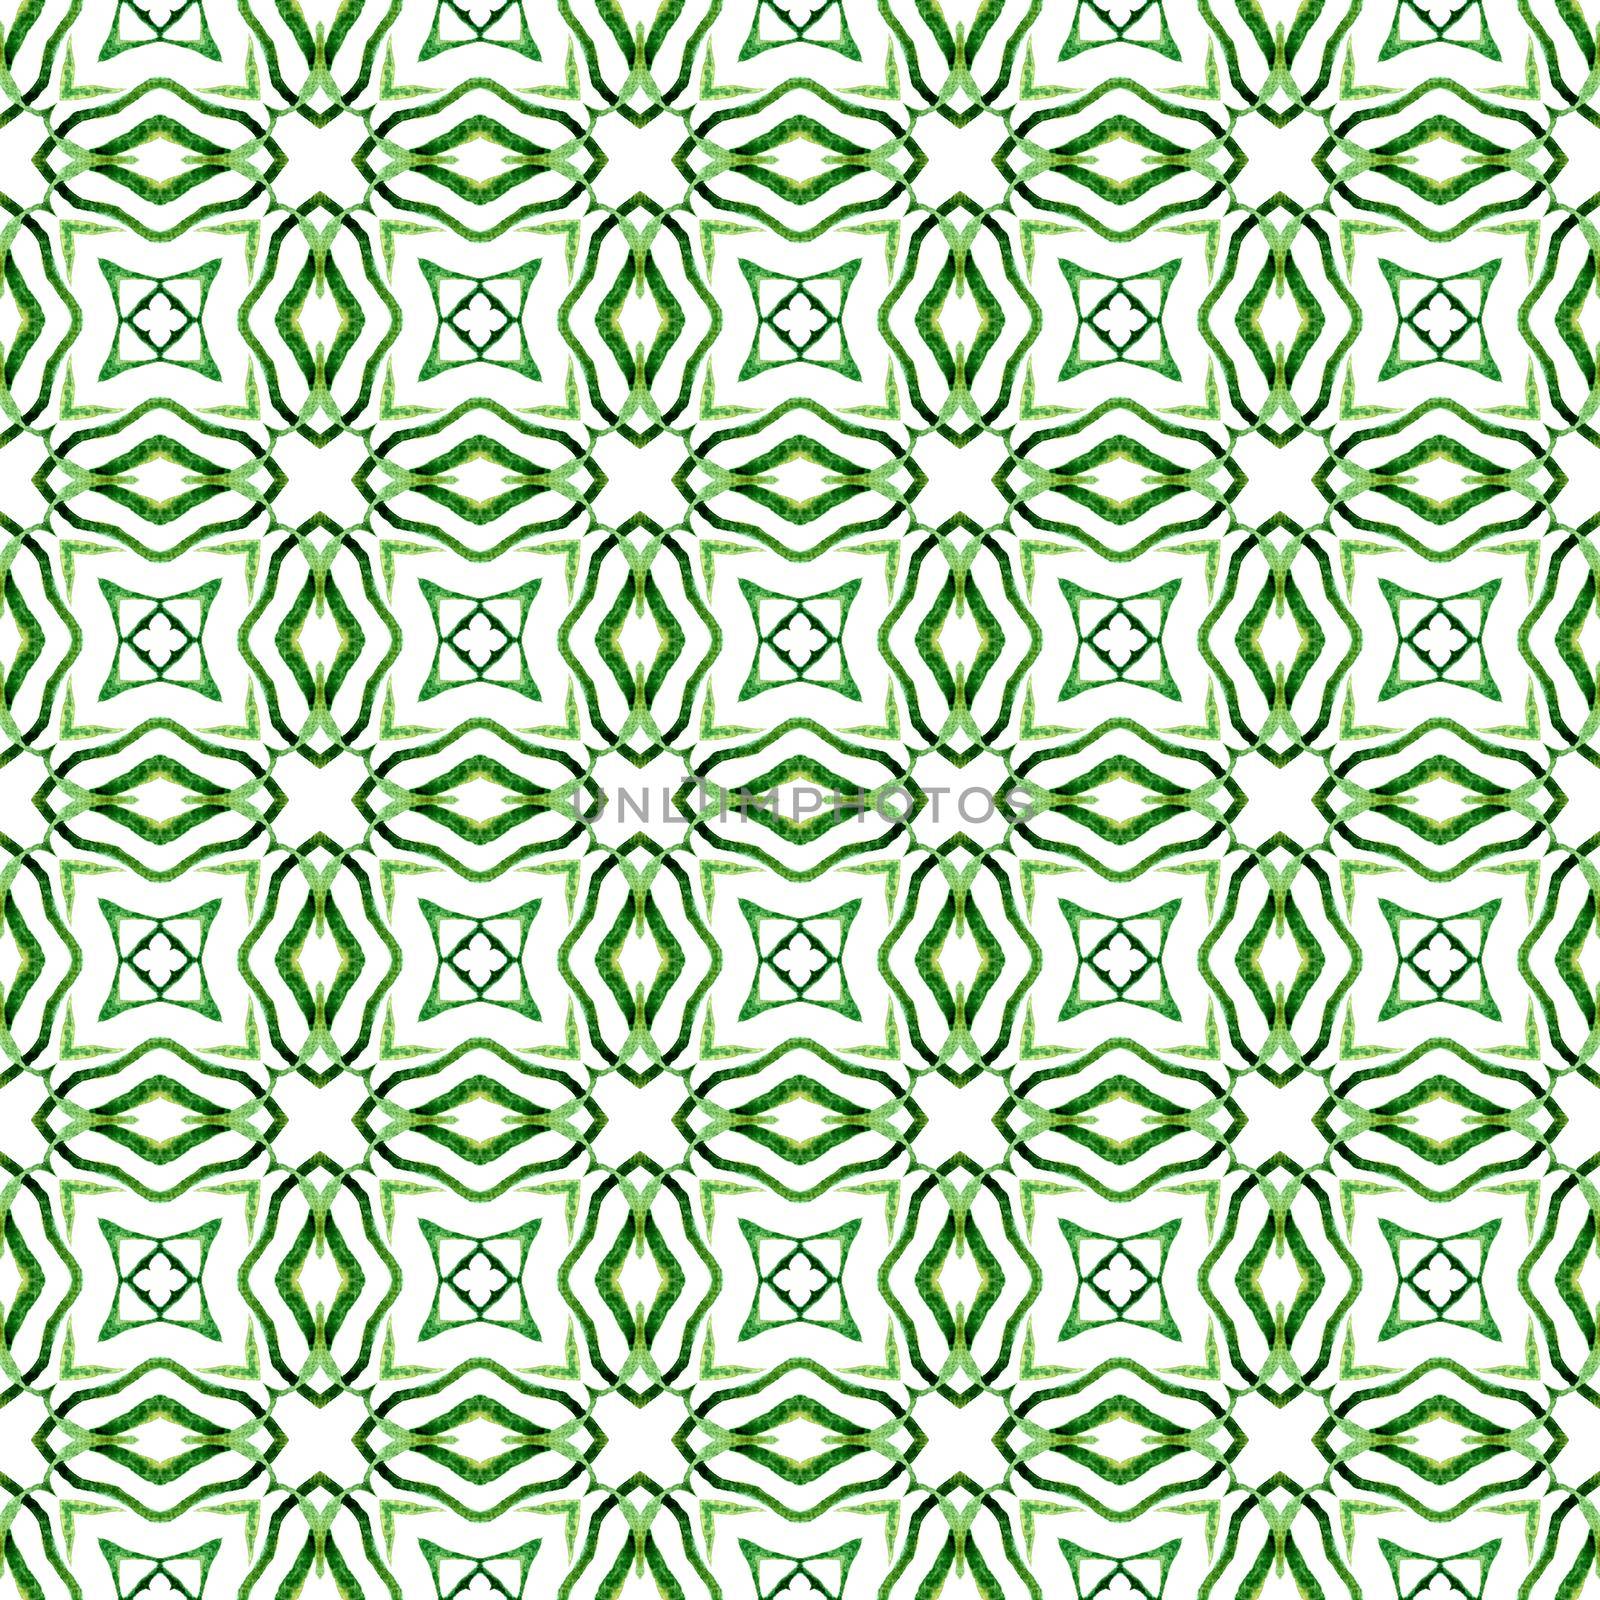 Repeating striped hand drawn border. Green by beginagain